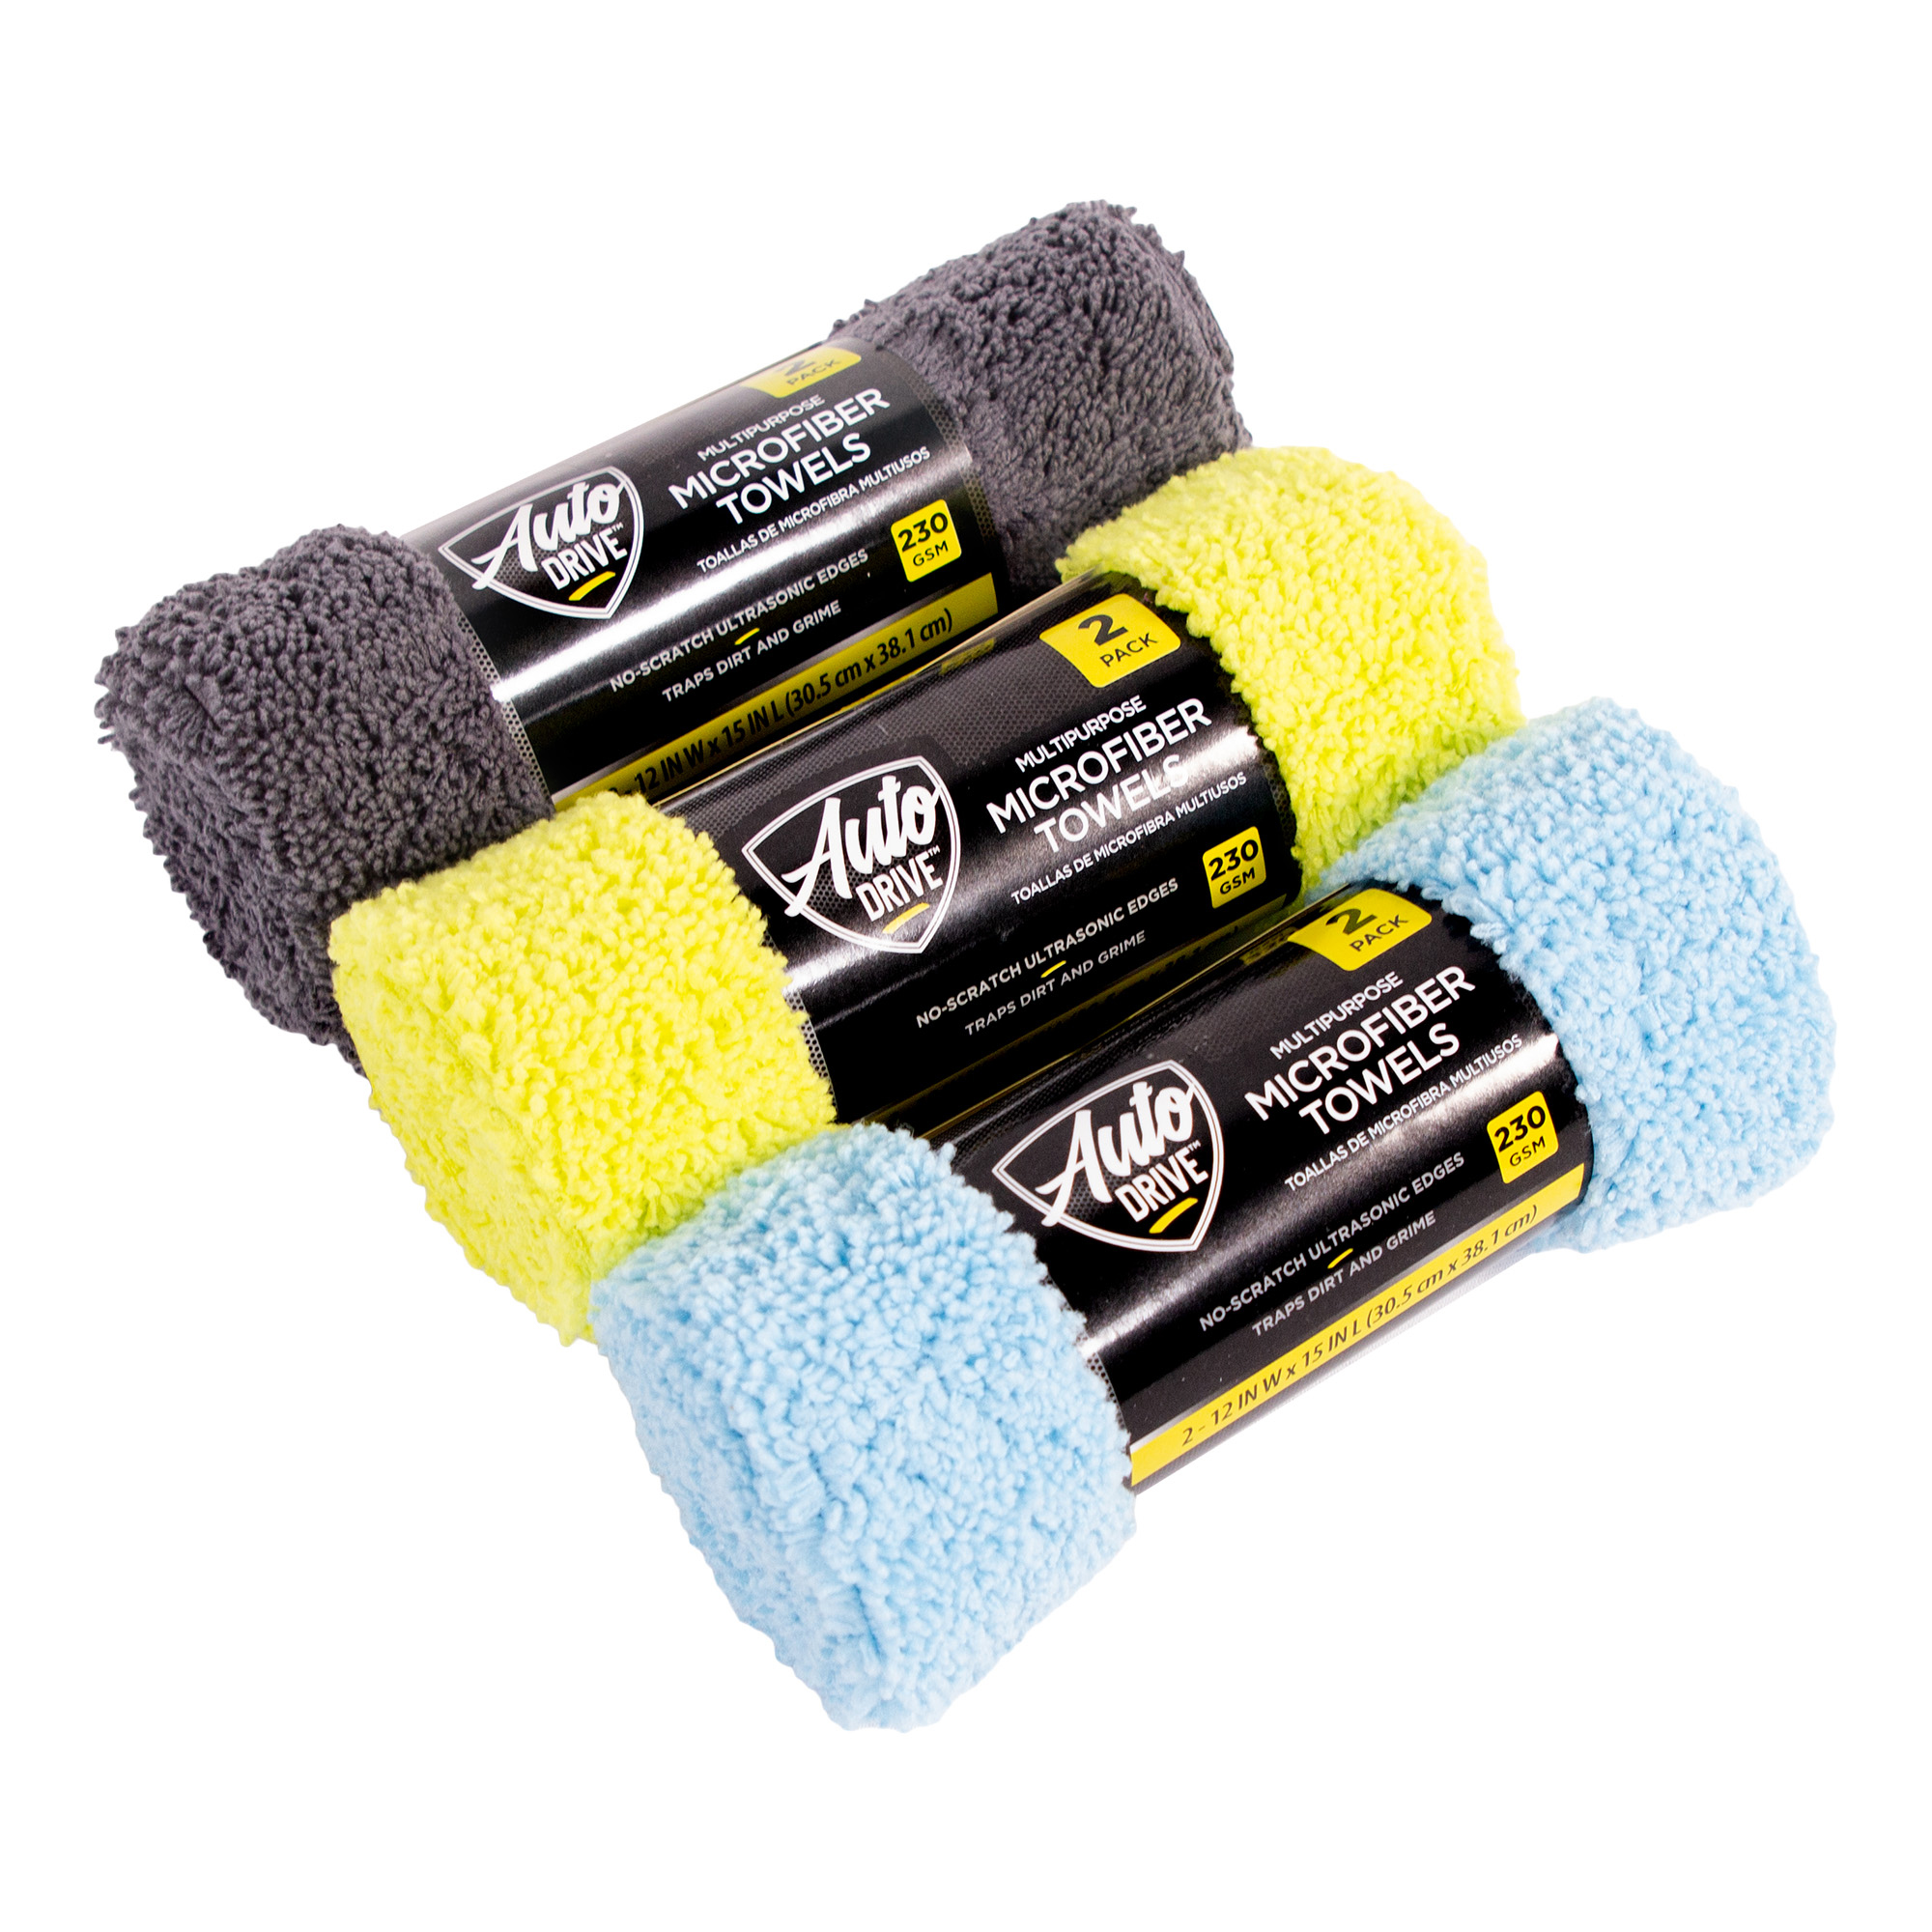 Auto Drive Microfiber Multi-Purpose Microfiber Towel, Cleaning Towel 2 Pack, Assorted Colors - image 1 of 7